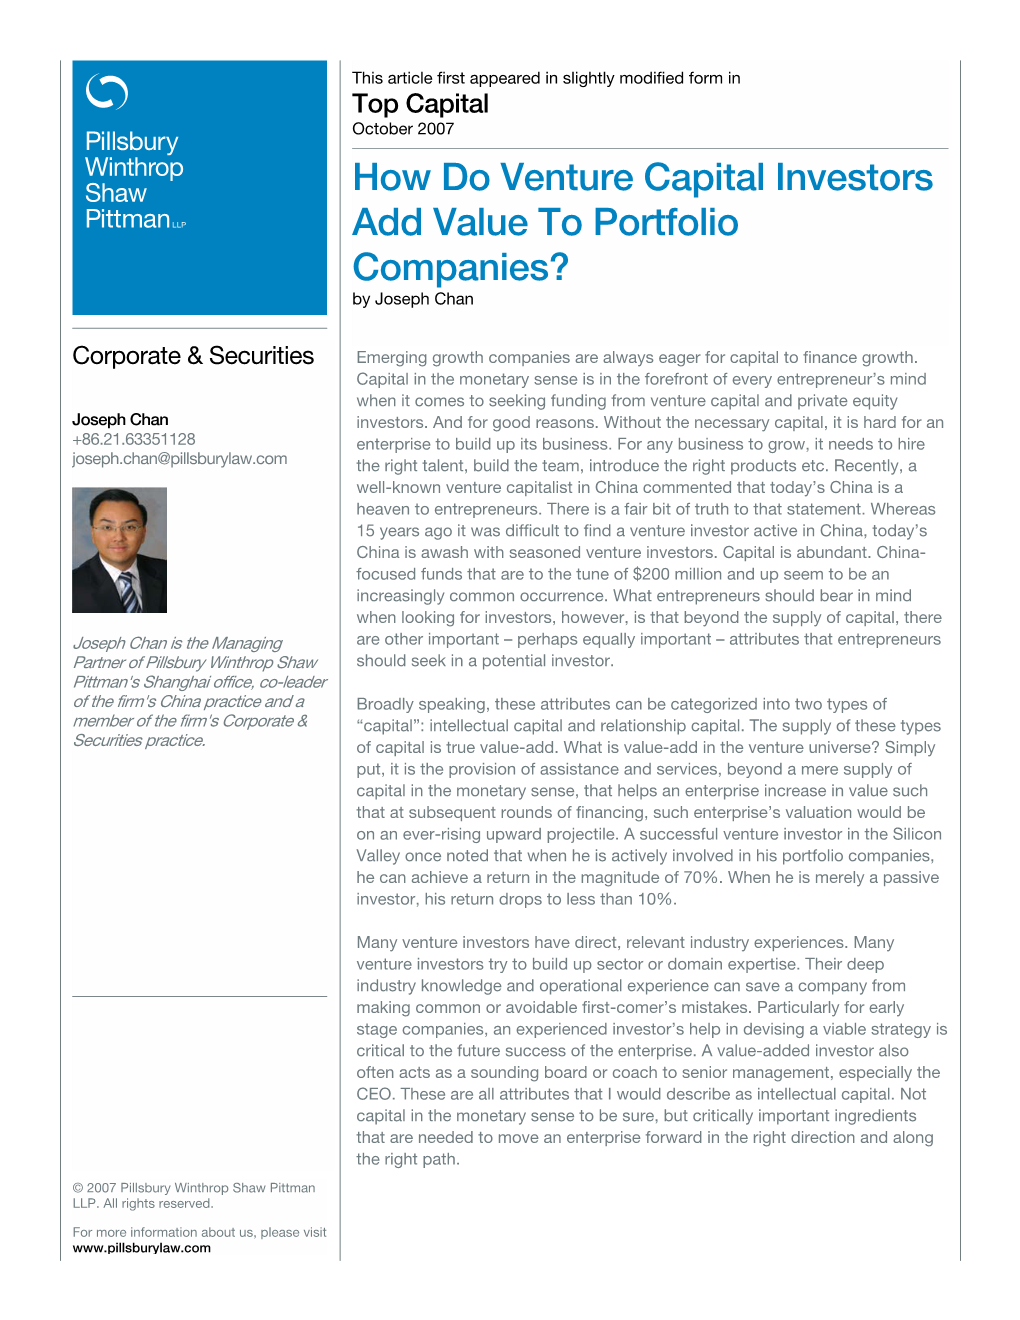 How Do Venture Capital Investors Add Value to Portfolio Companies? by Joseph Chan